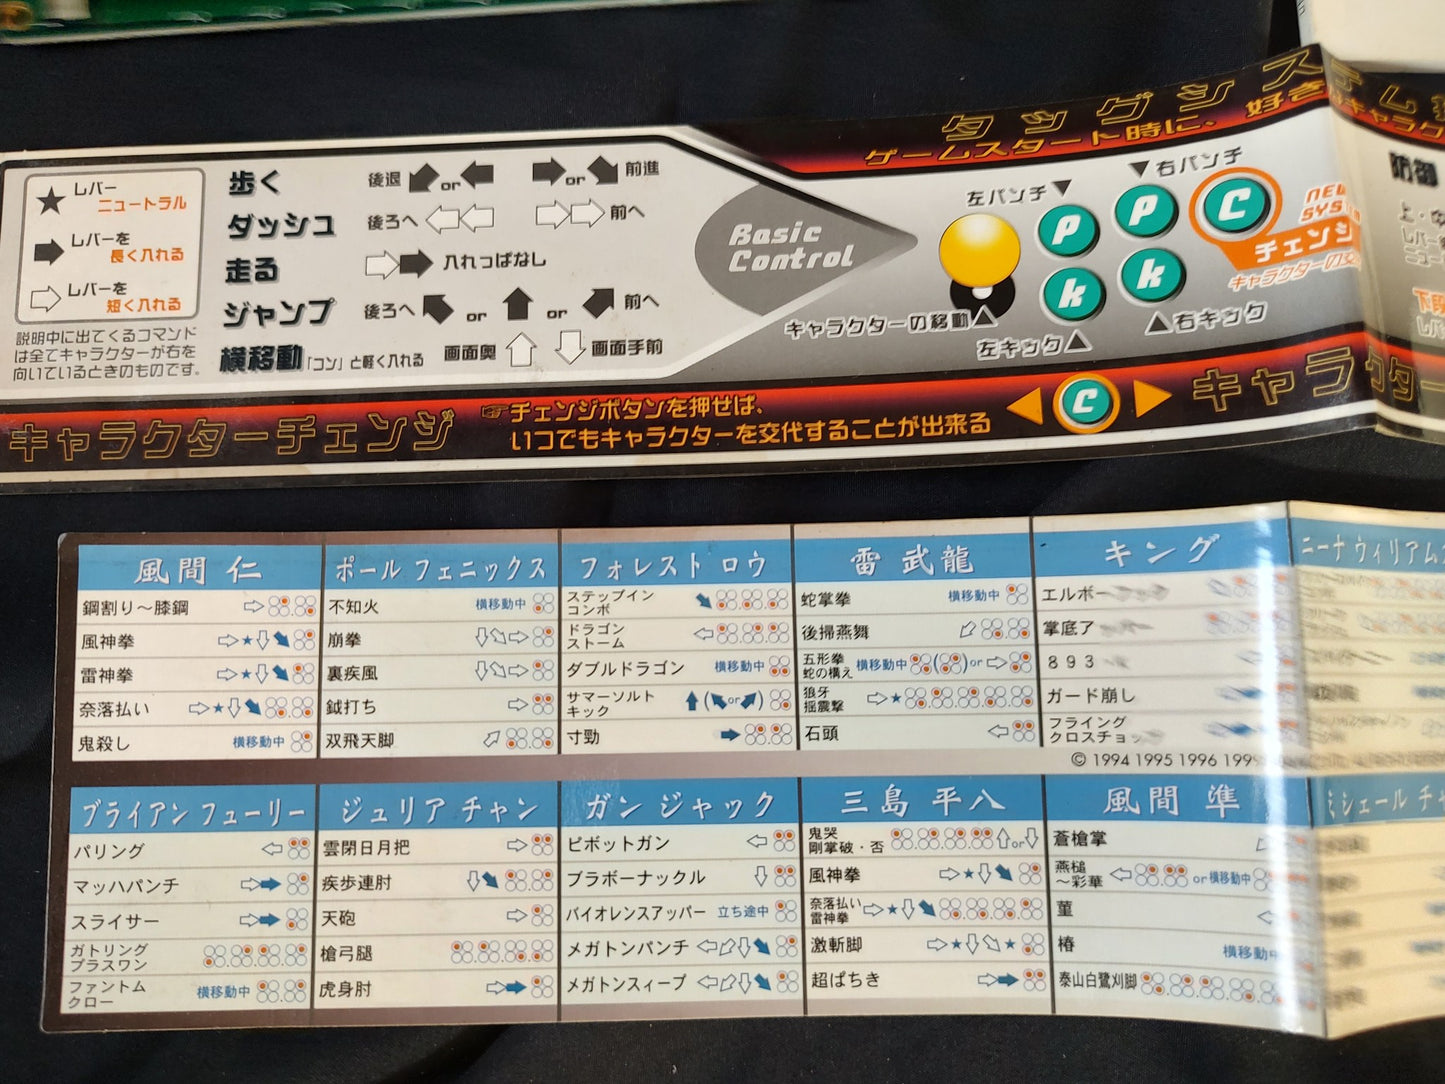 TEKKEN TAG TOURNAMENT NAMCO Arcade PCB System JAMMA Board, Working-f0824-